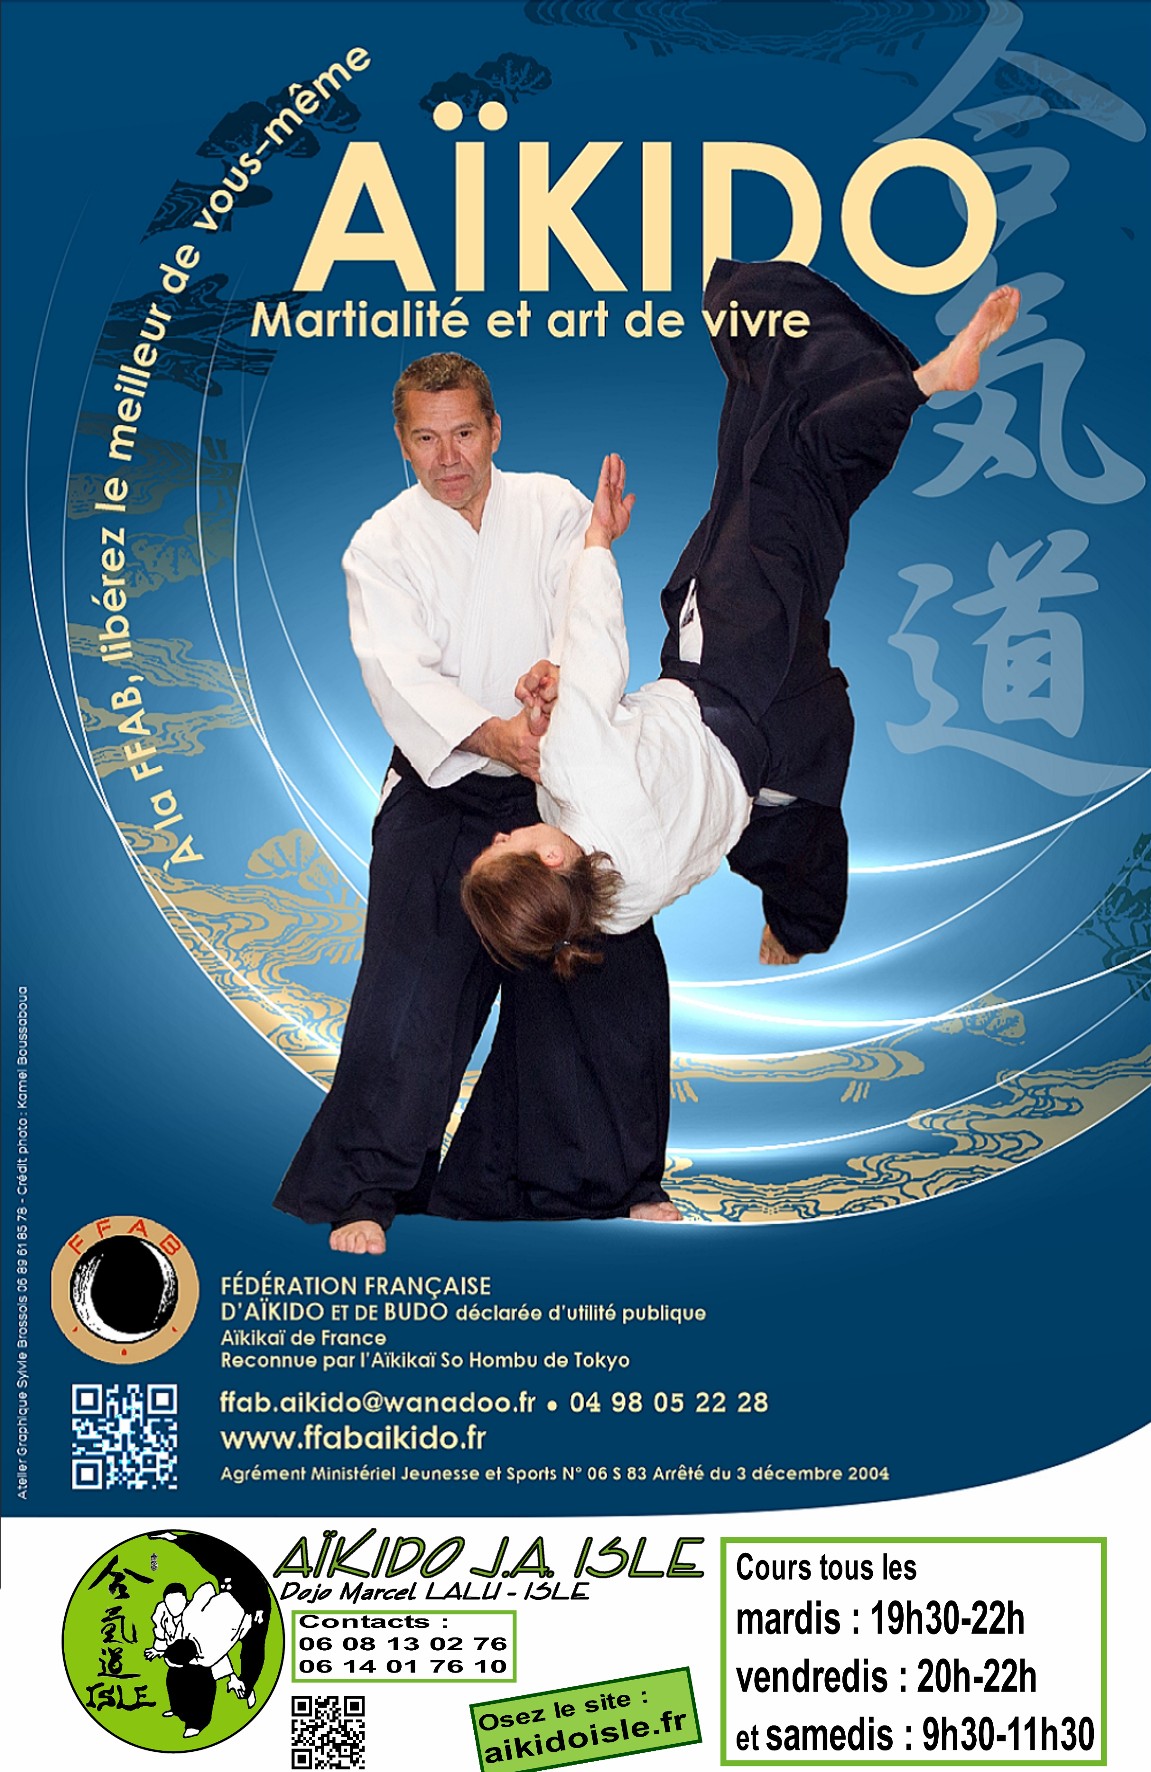 190313 New affiche Aikido Didier Cartouche ISLE.jpg - 440,95 kB